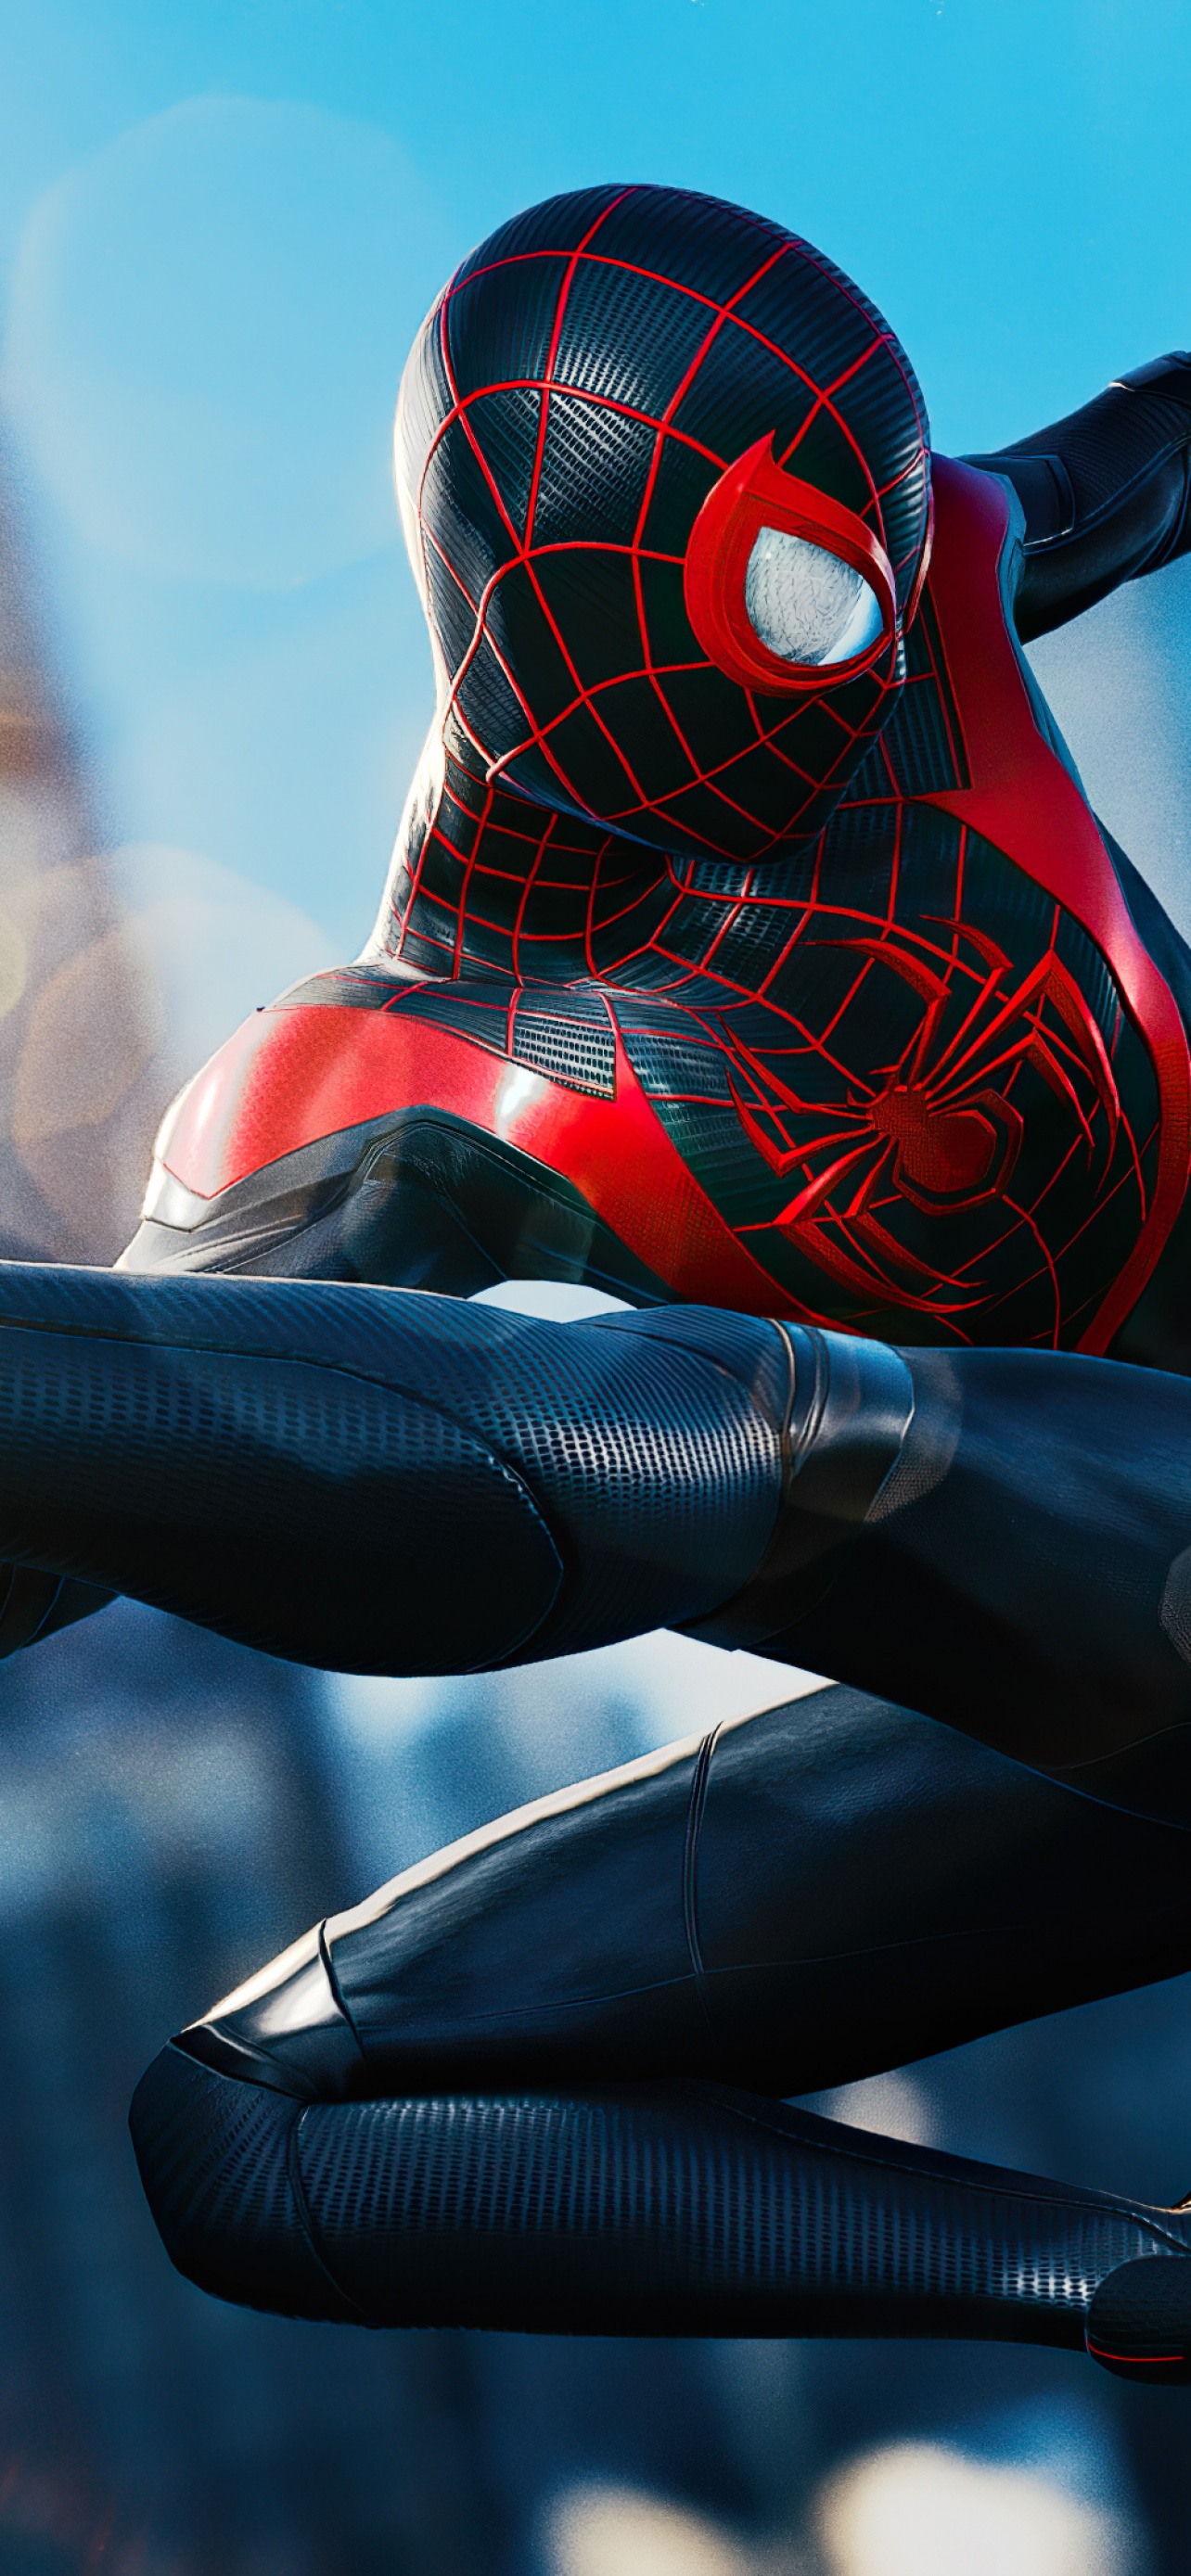 Marvel's Spider-Man: Miles Morales Wallpaper 4K, Photo mode, Games, #3638